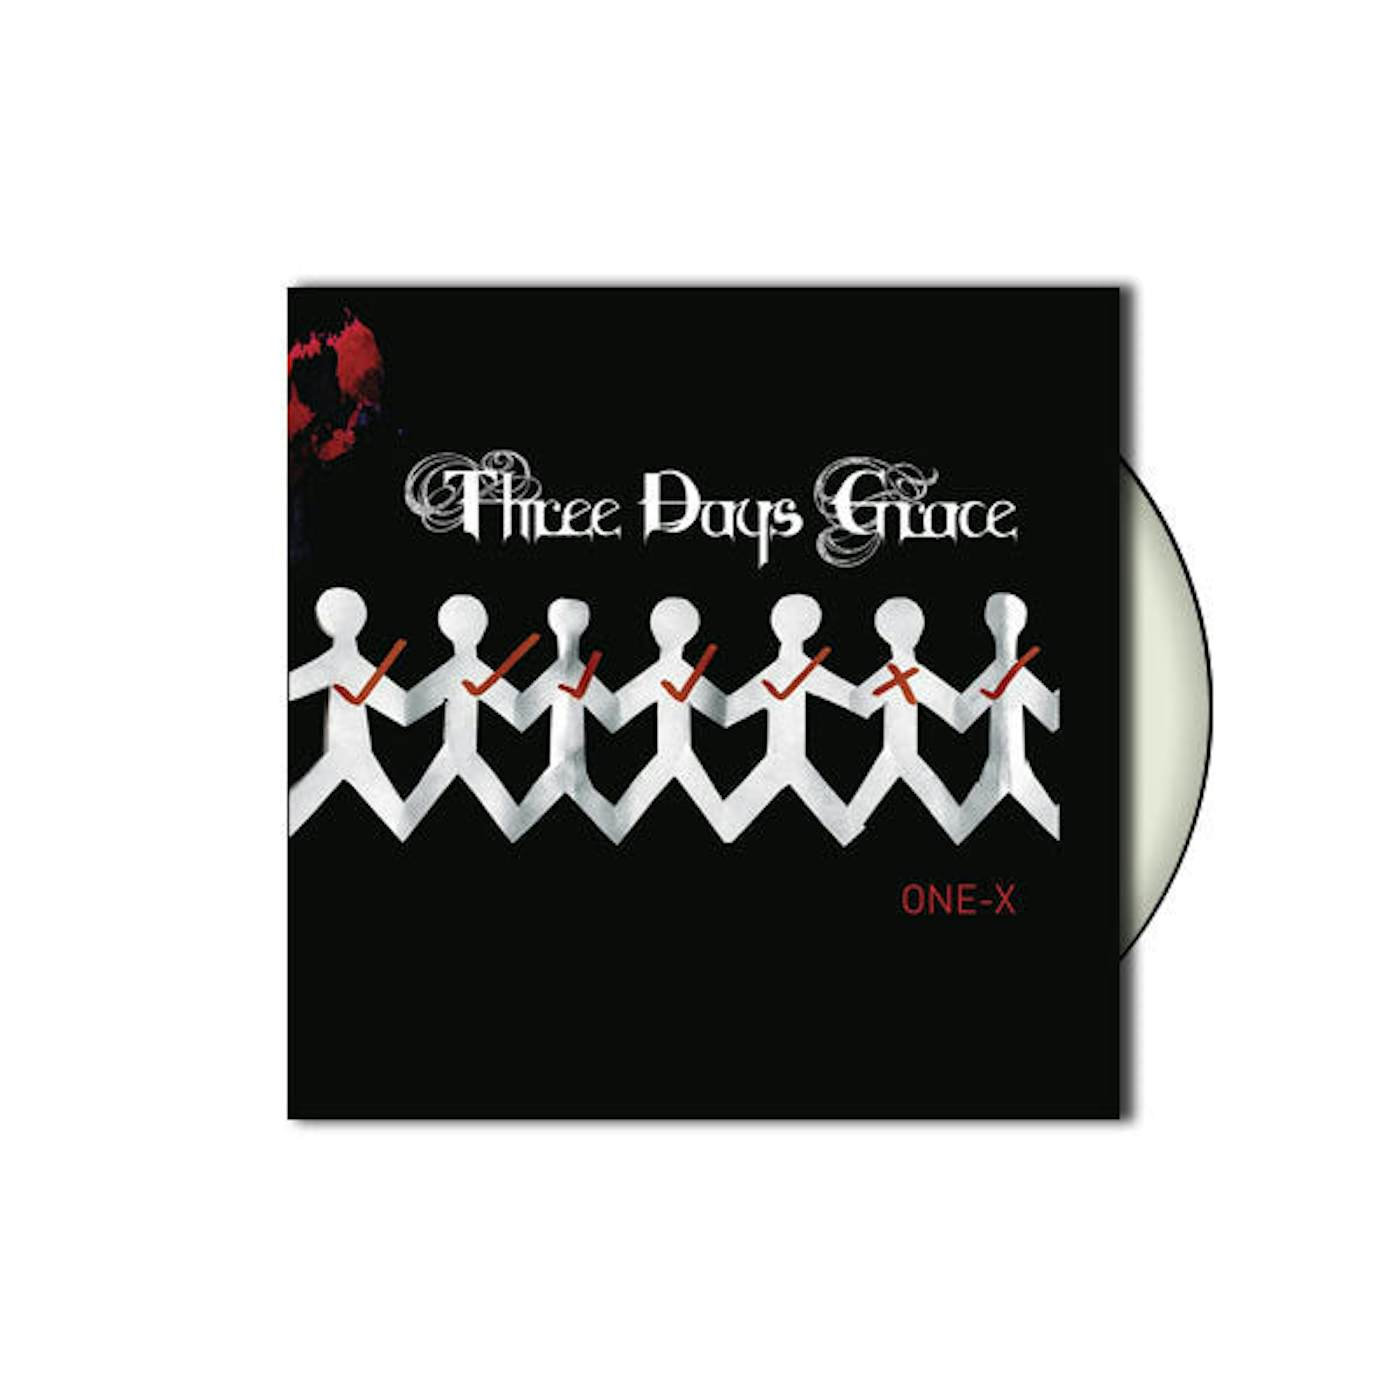 Three Days Grace One-X Album on CD